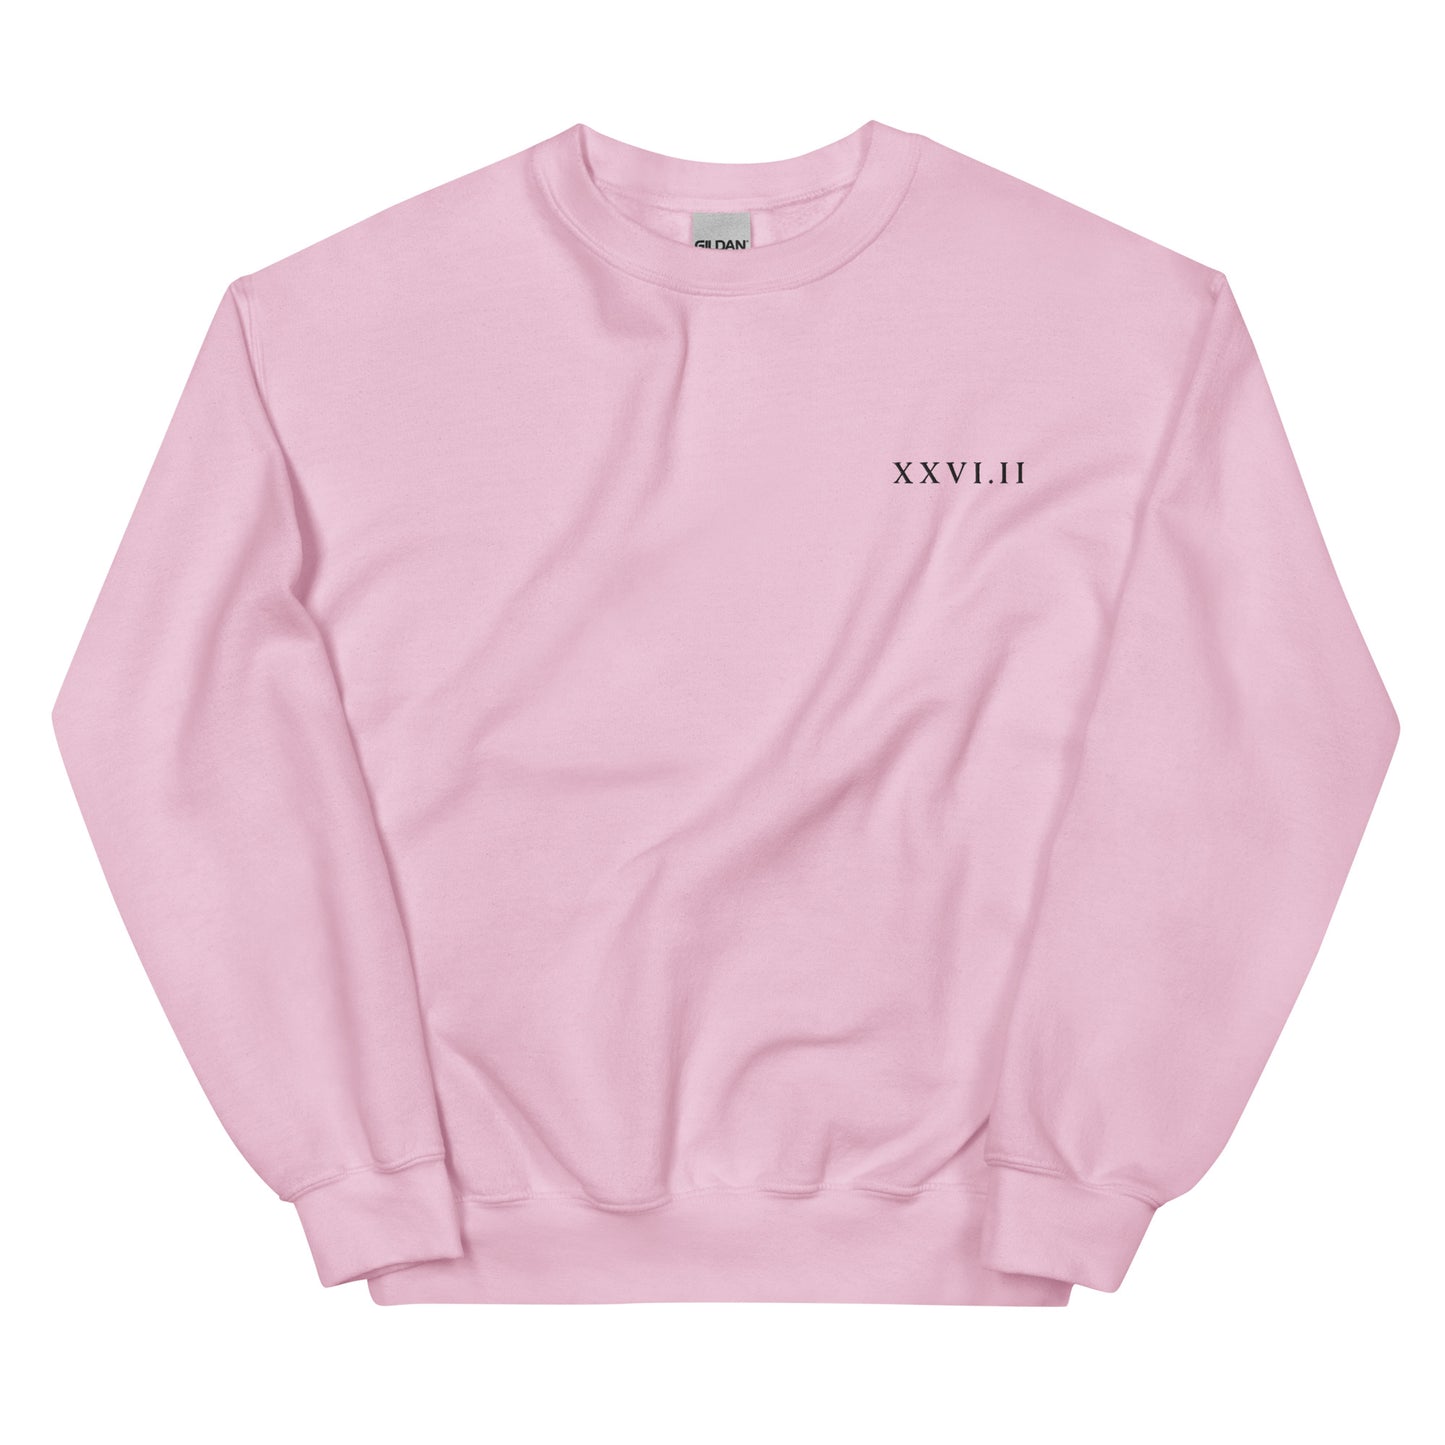 pink sweatshirt with xxvi.ii 26.2 marathon distance in roman numerals on the left breast